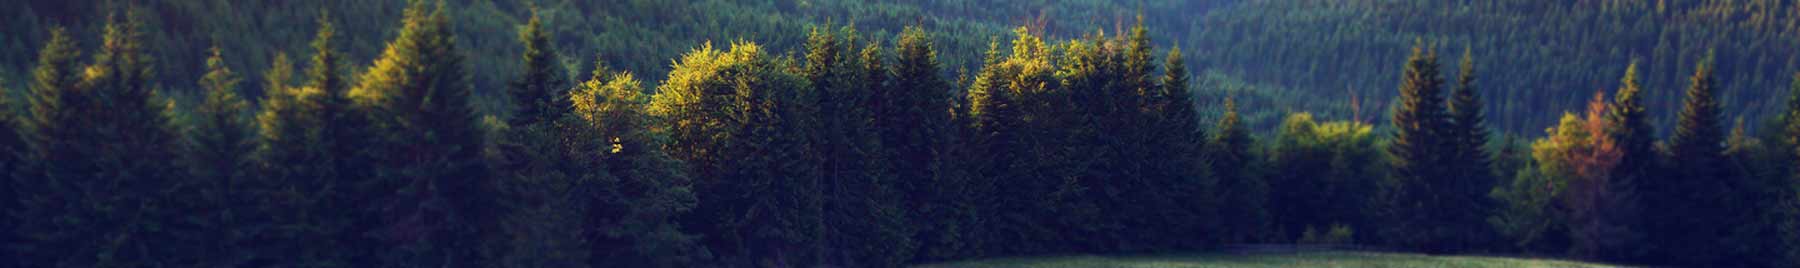 dark conifer trees